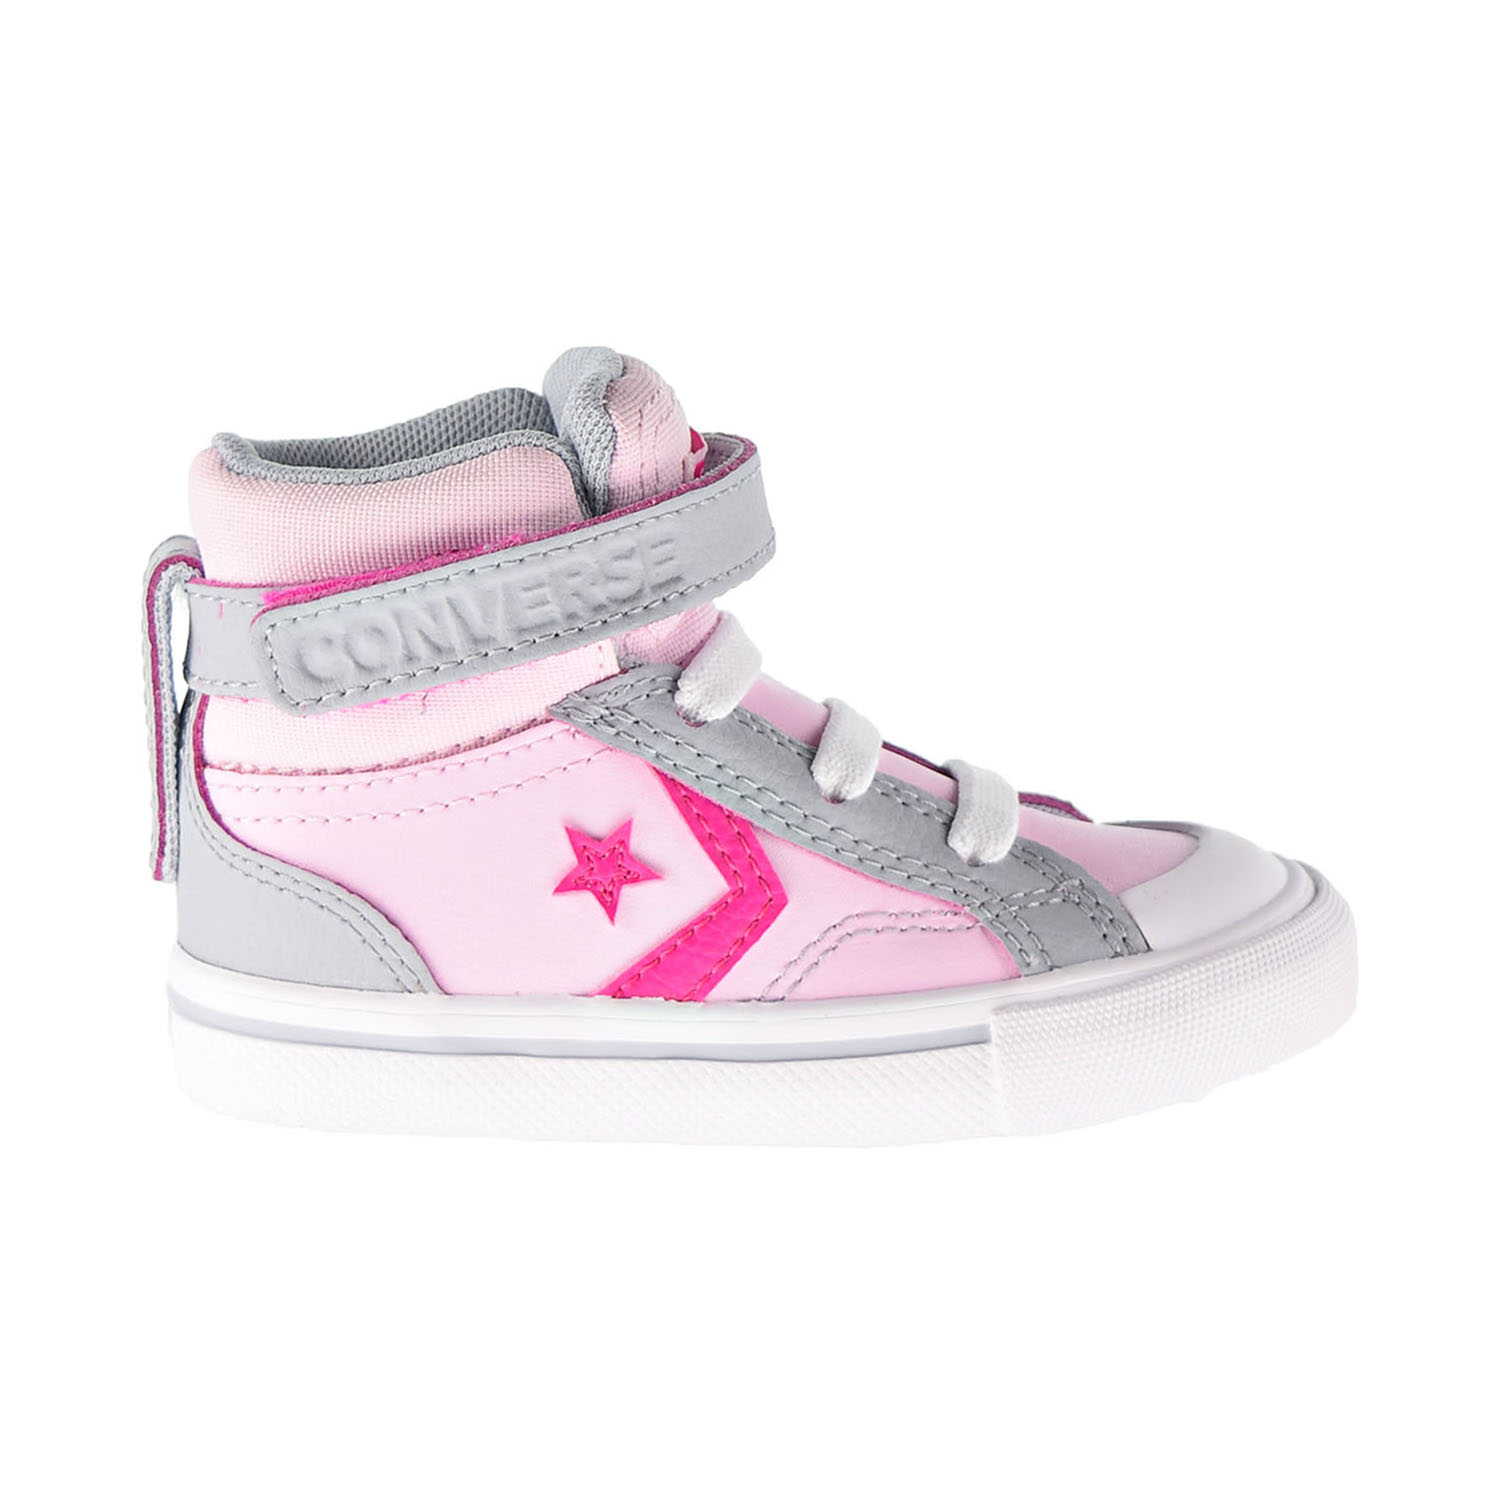 grey converse toddler shoes